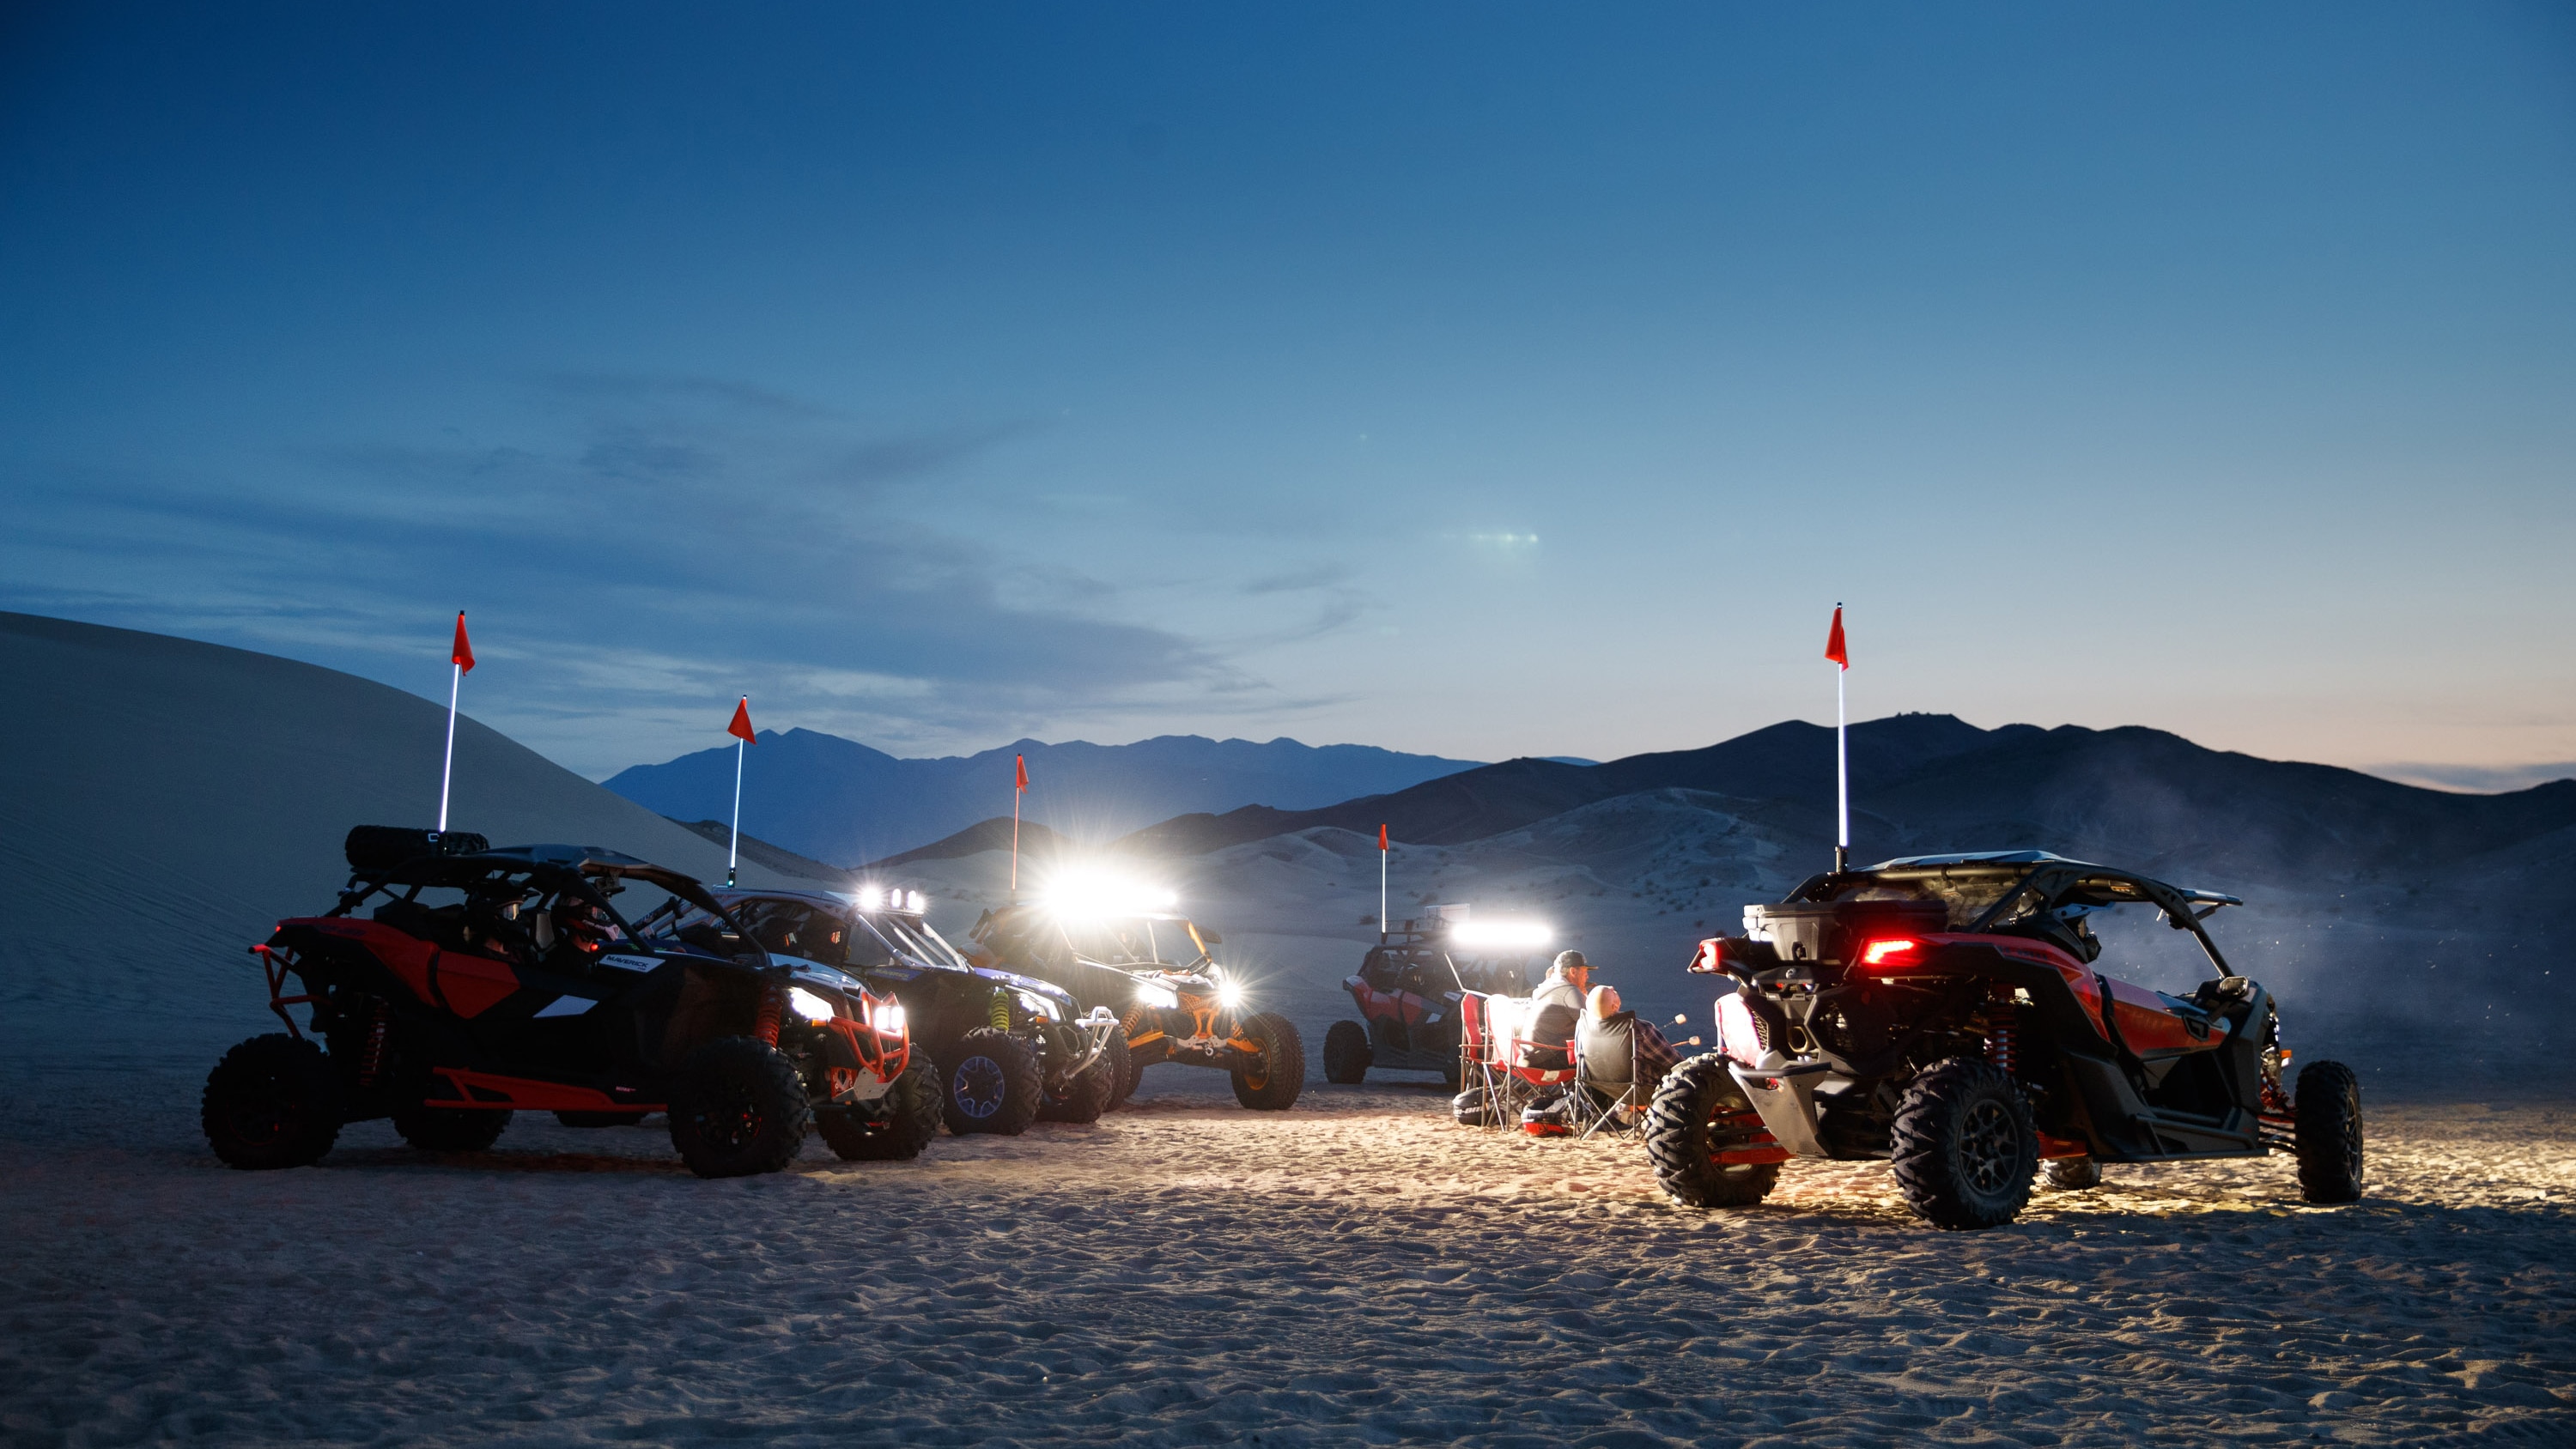 Five Maverick models at night in the desert